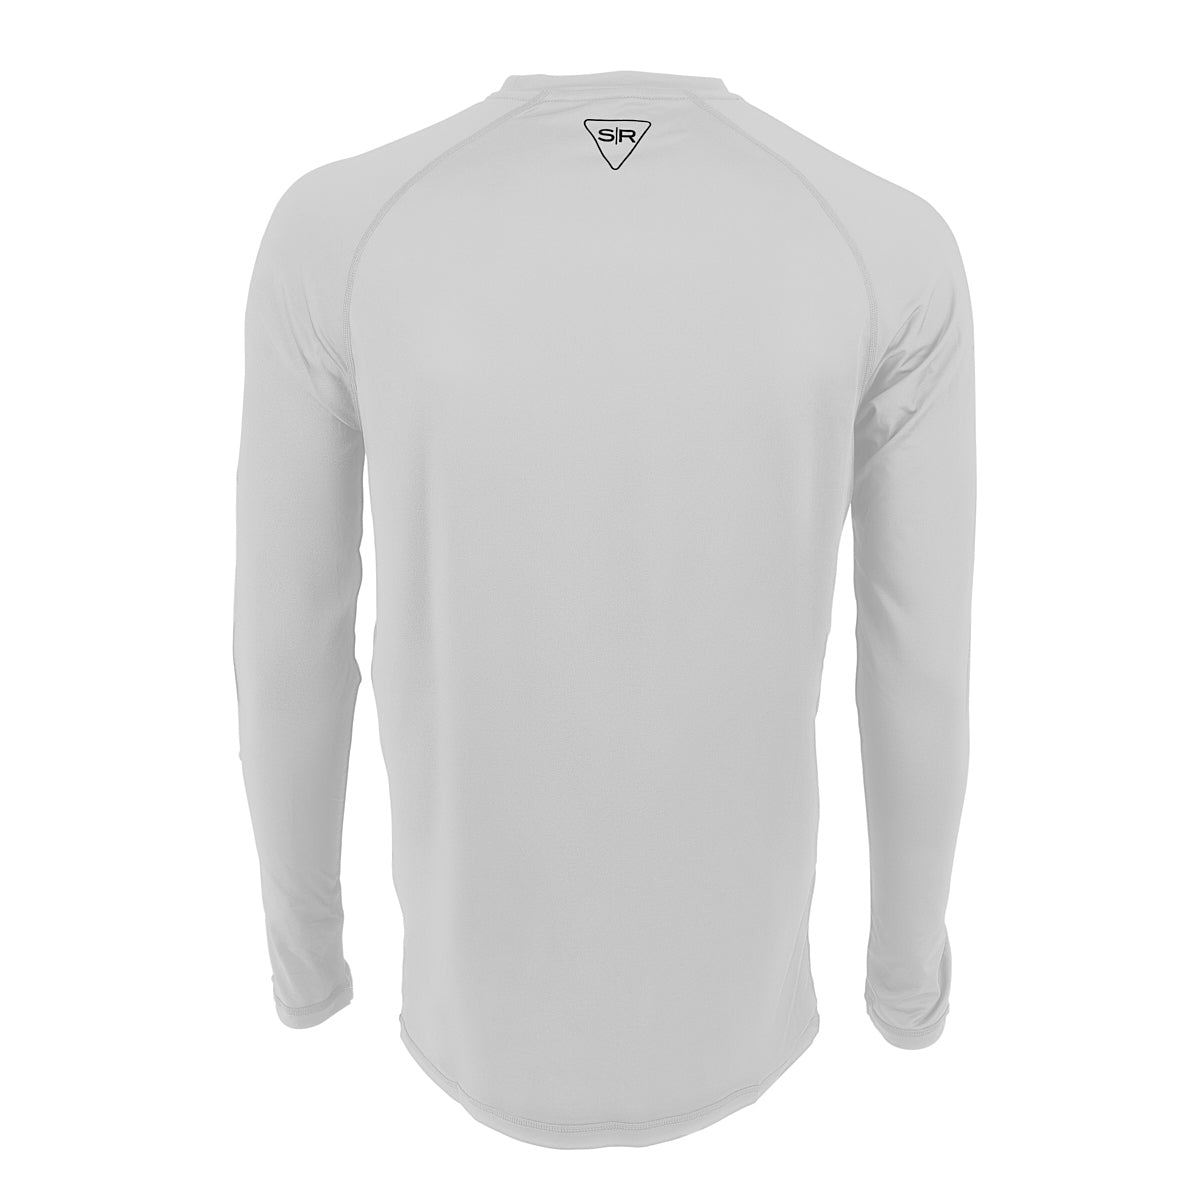 UV Protection Long Sleeve Shirt - White